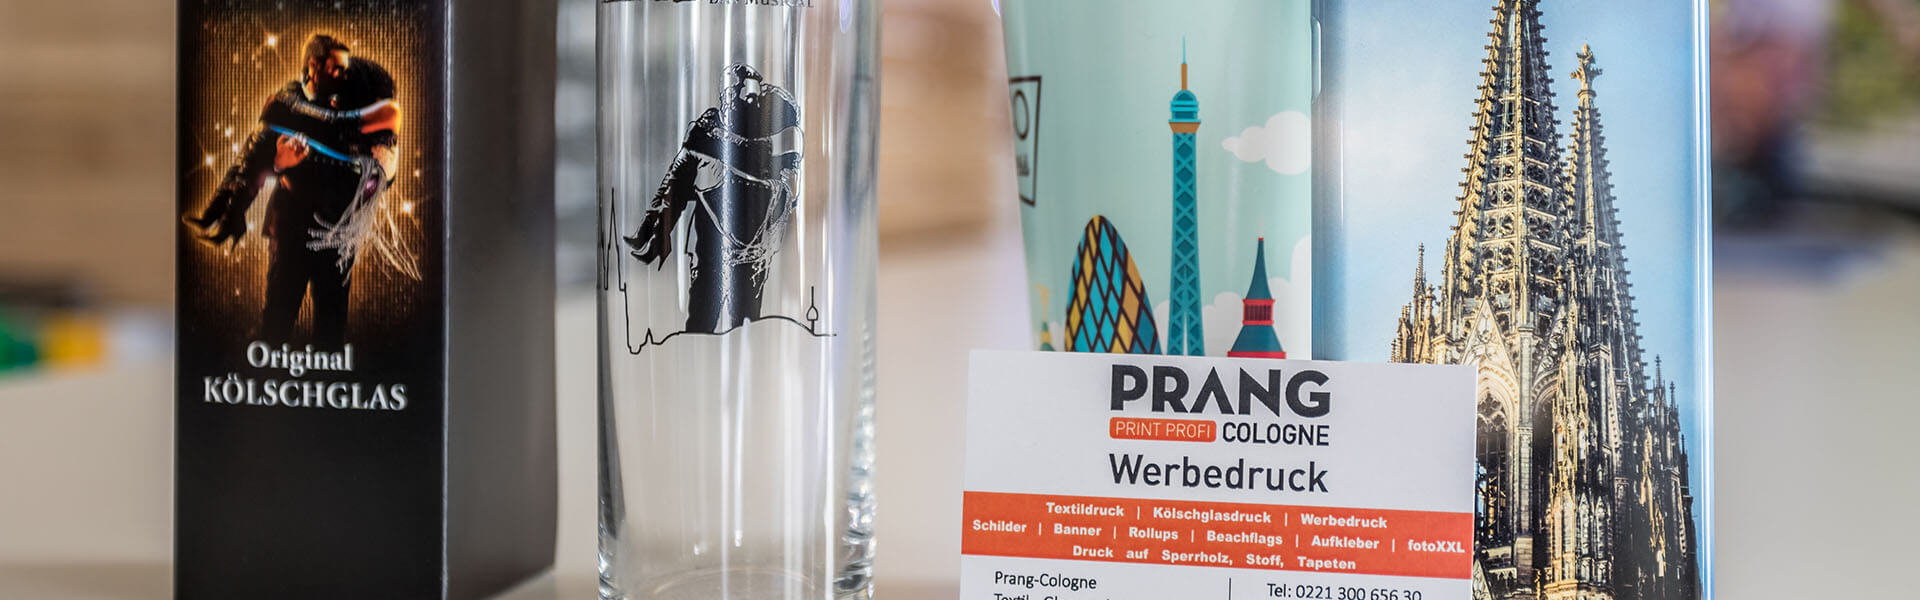 Bilder Prang-Cologne Werbedruck GmbH